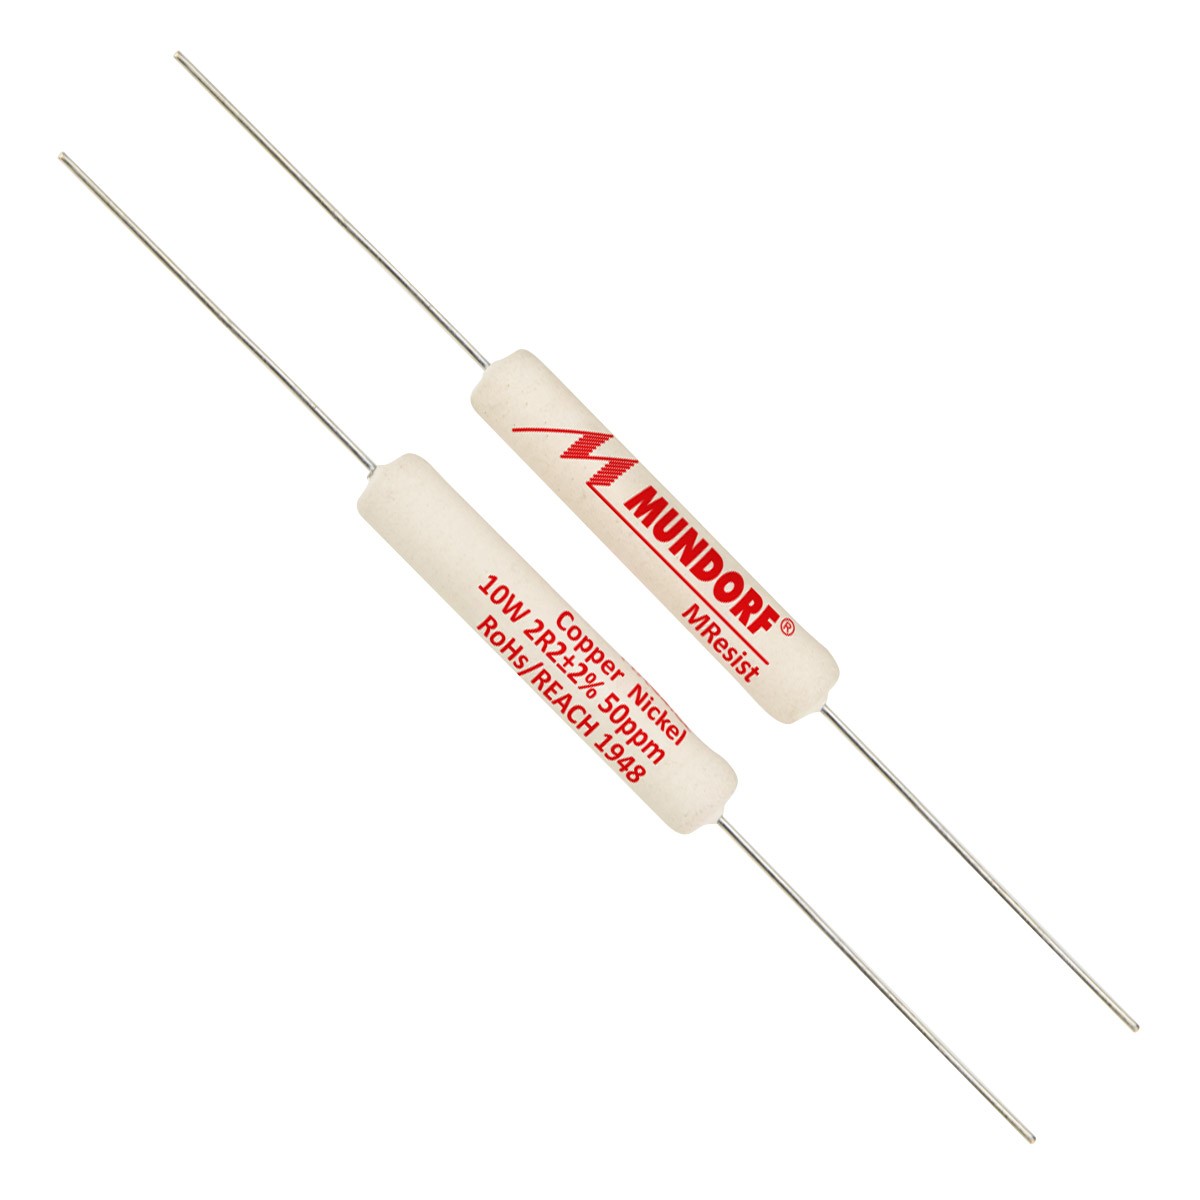 MUNDORF MRESIST CLASSIC Resistor 10W 0.33 Ohm